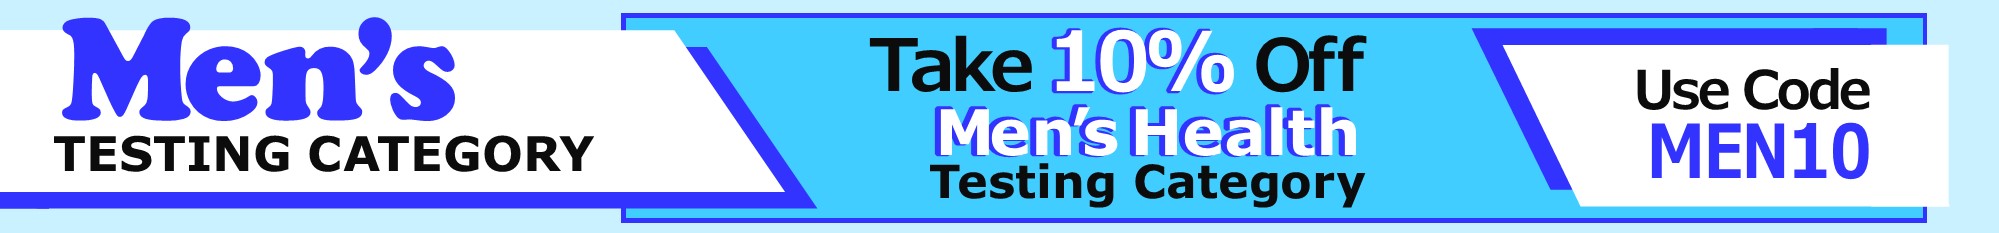 June Promotion 10% Off Men's Health Test Category